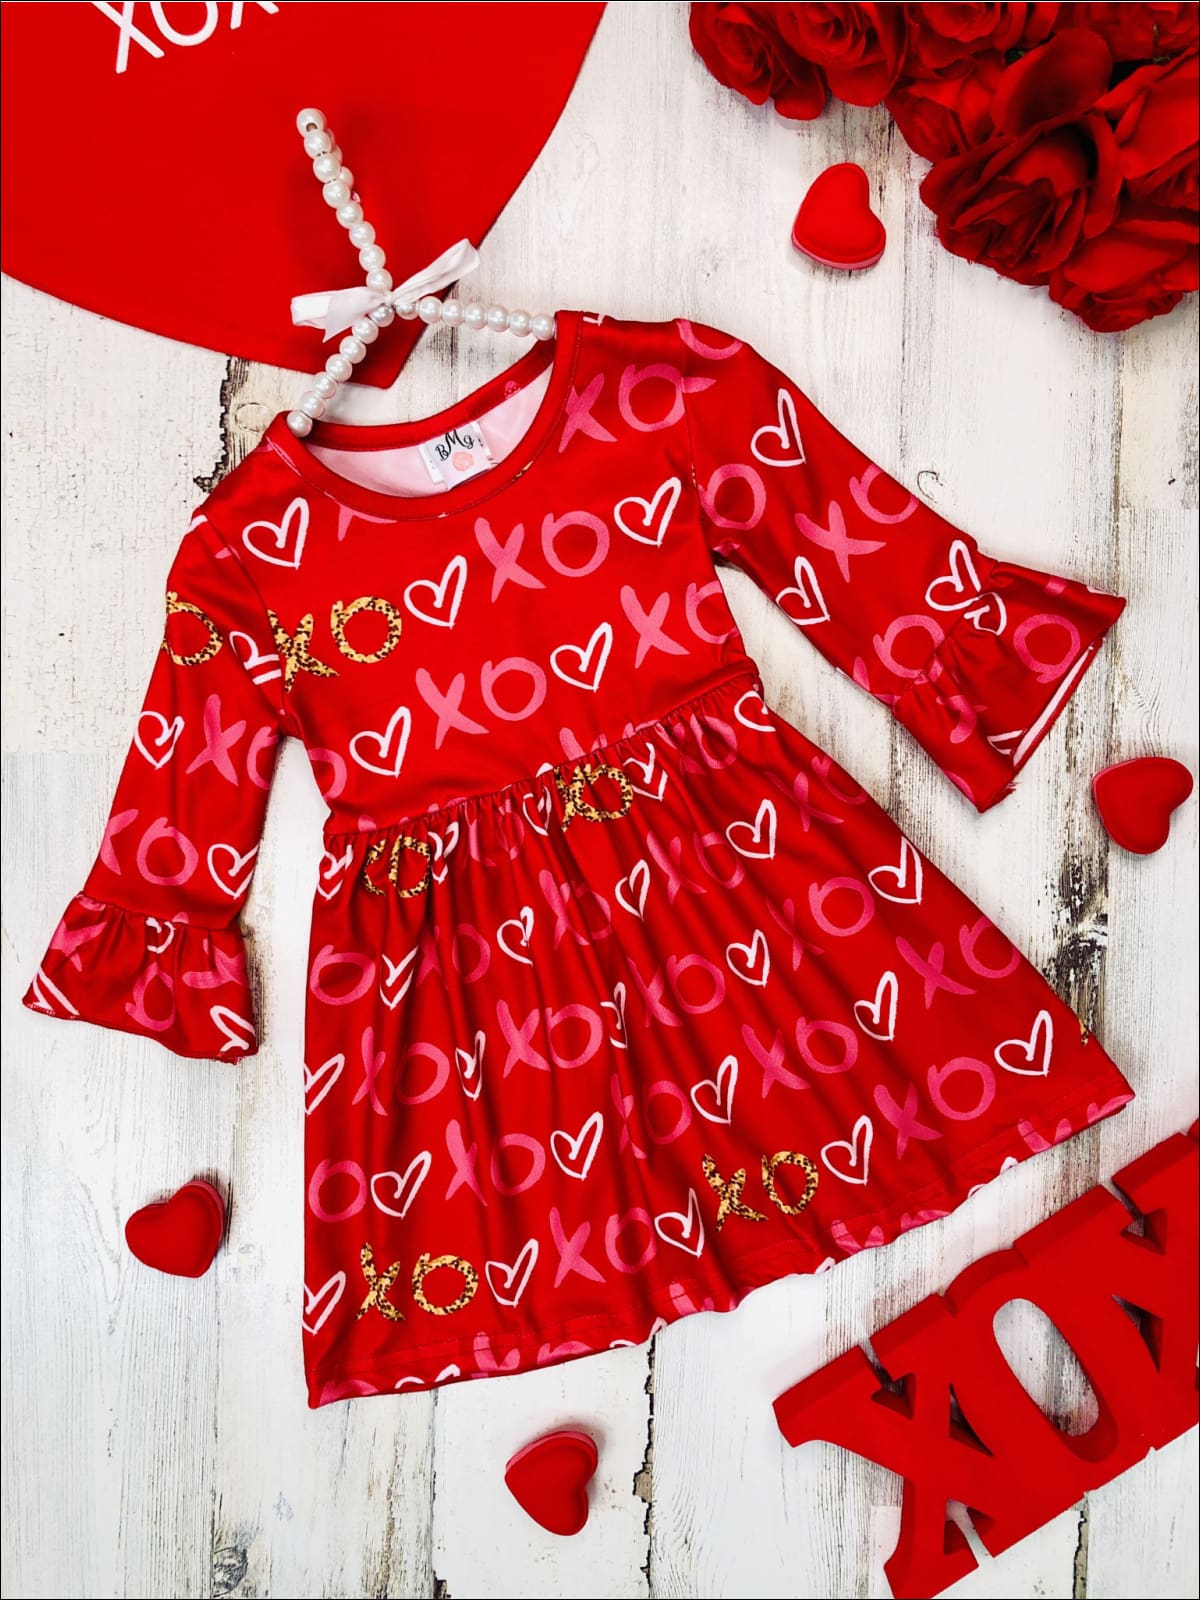 Girls XO and Heart Print Ruffled Dress - 2T / Red - Girls Fall Casual Dress